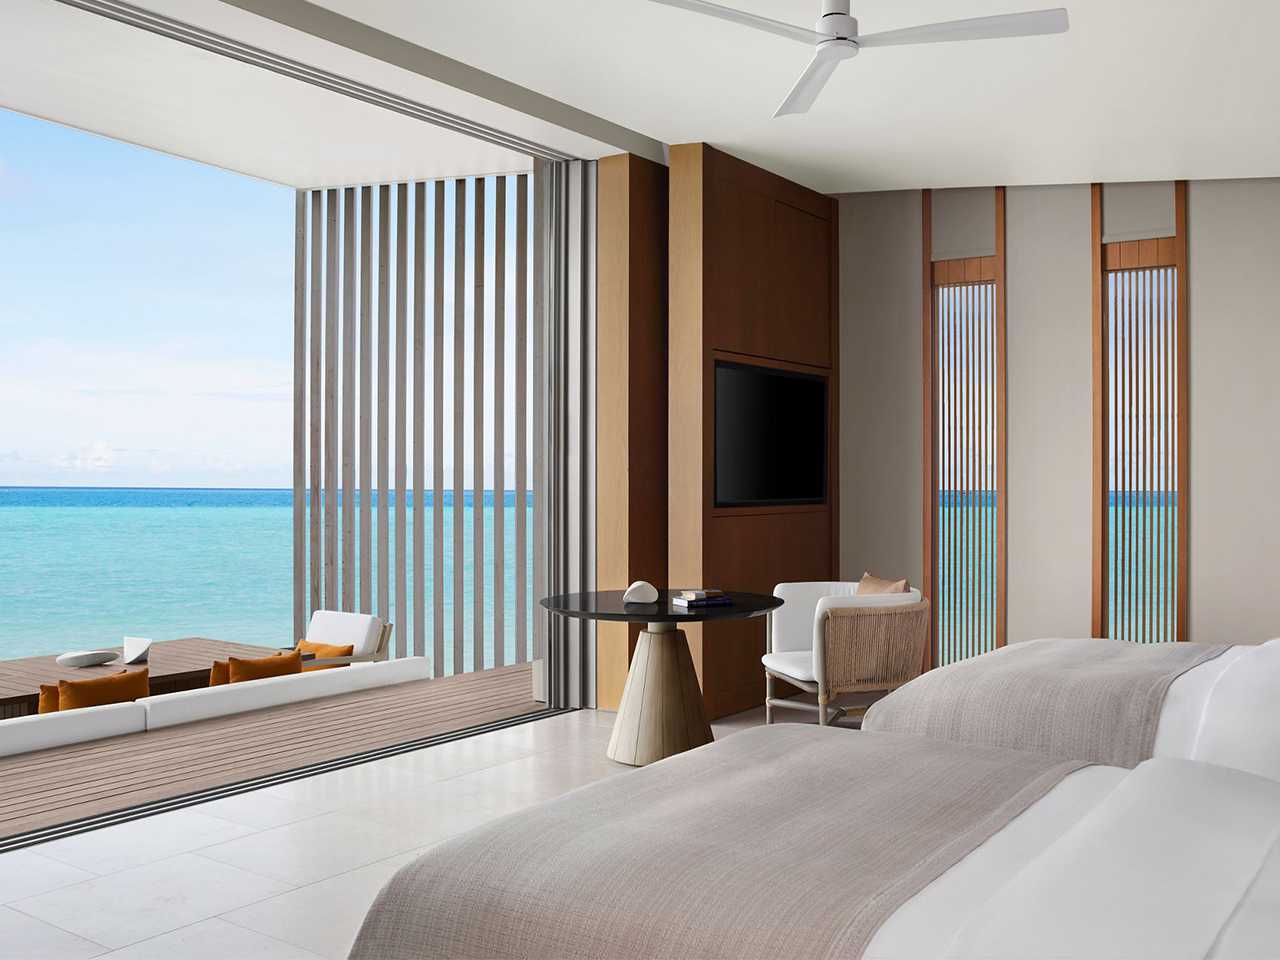 The Ritz-Carlton Maldives Fari Islands Twin Bedroom